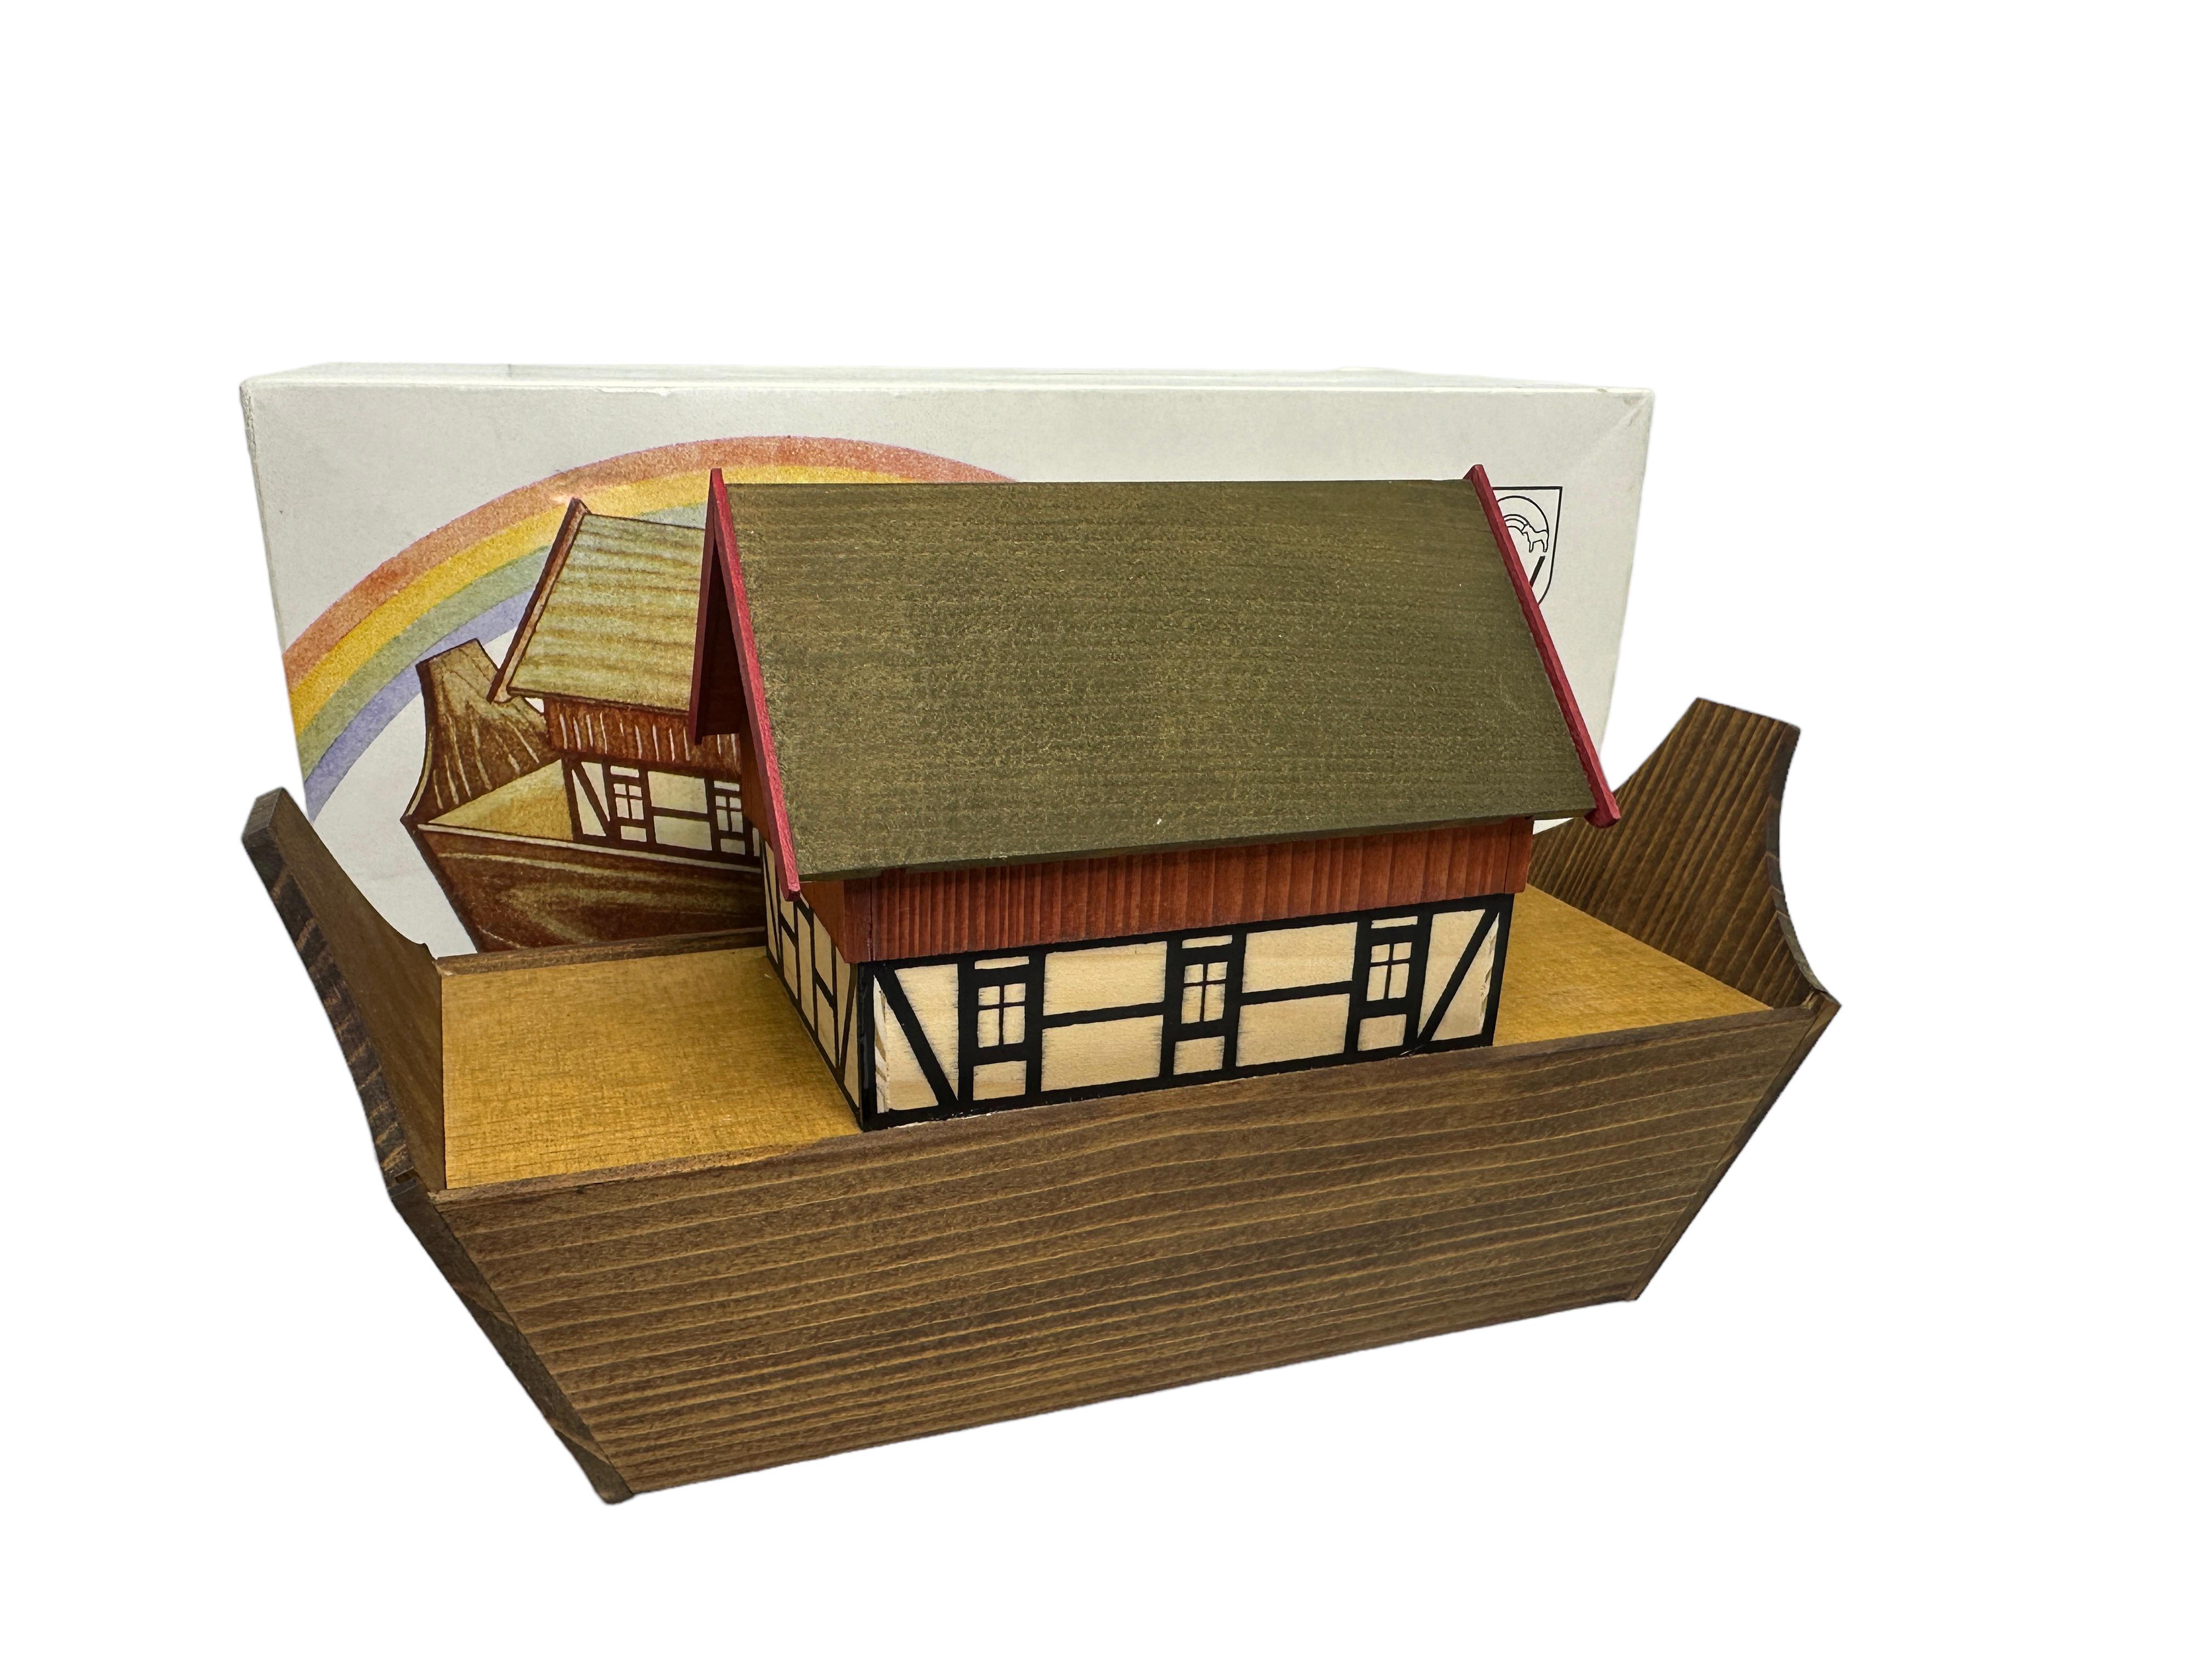  20th Century Erzgebirge German Noah’s Ark Putz Toy Set, Vintage Folk Art  For Sale 10